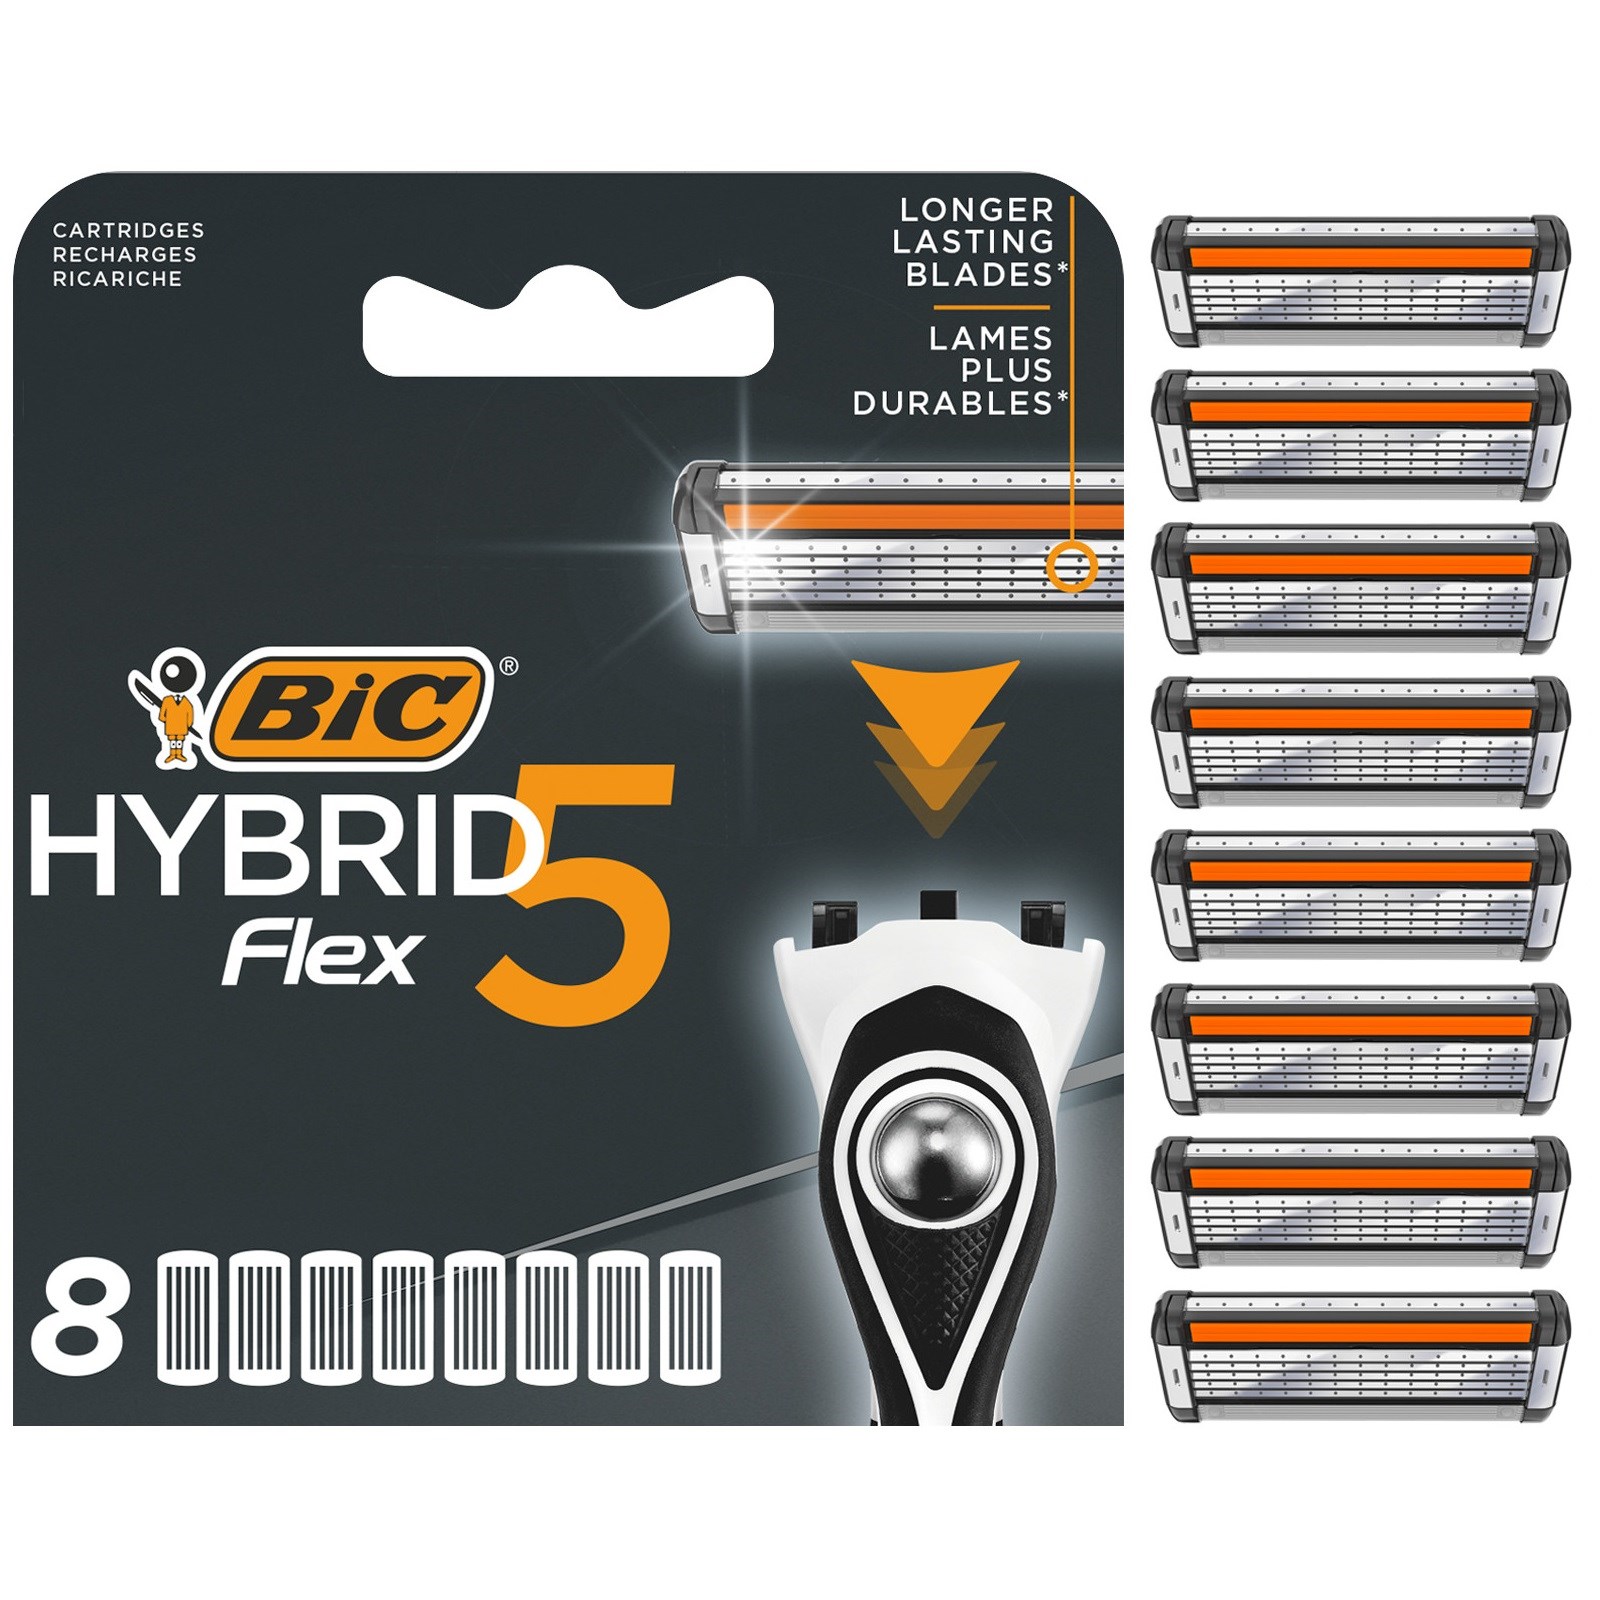 BIC Hybrid 5 Flex Refill 8 st